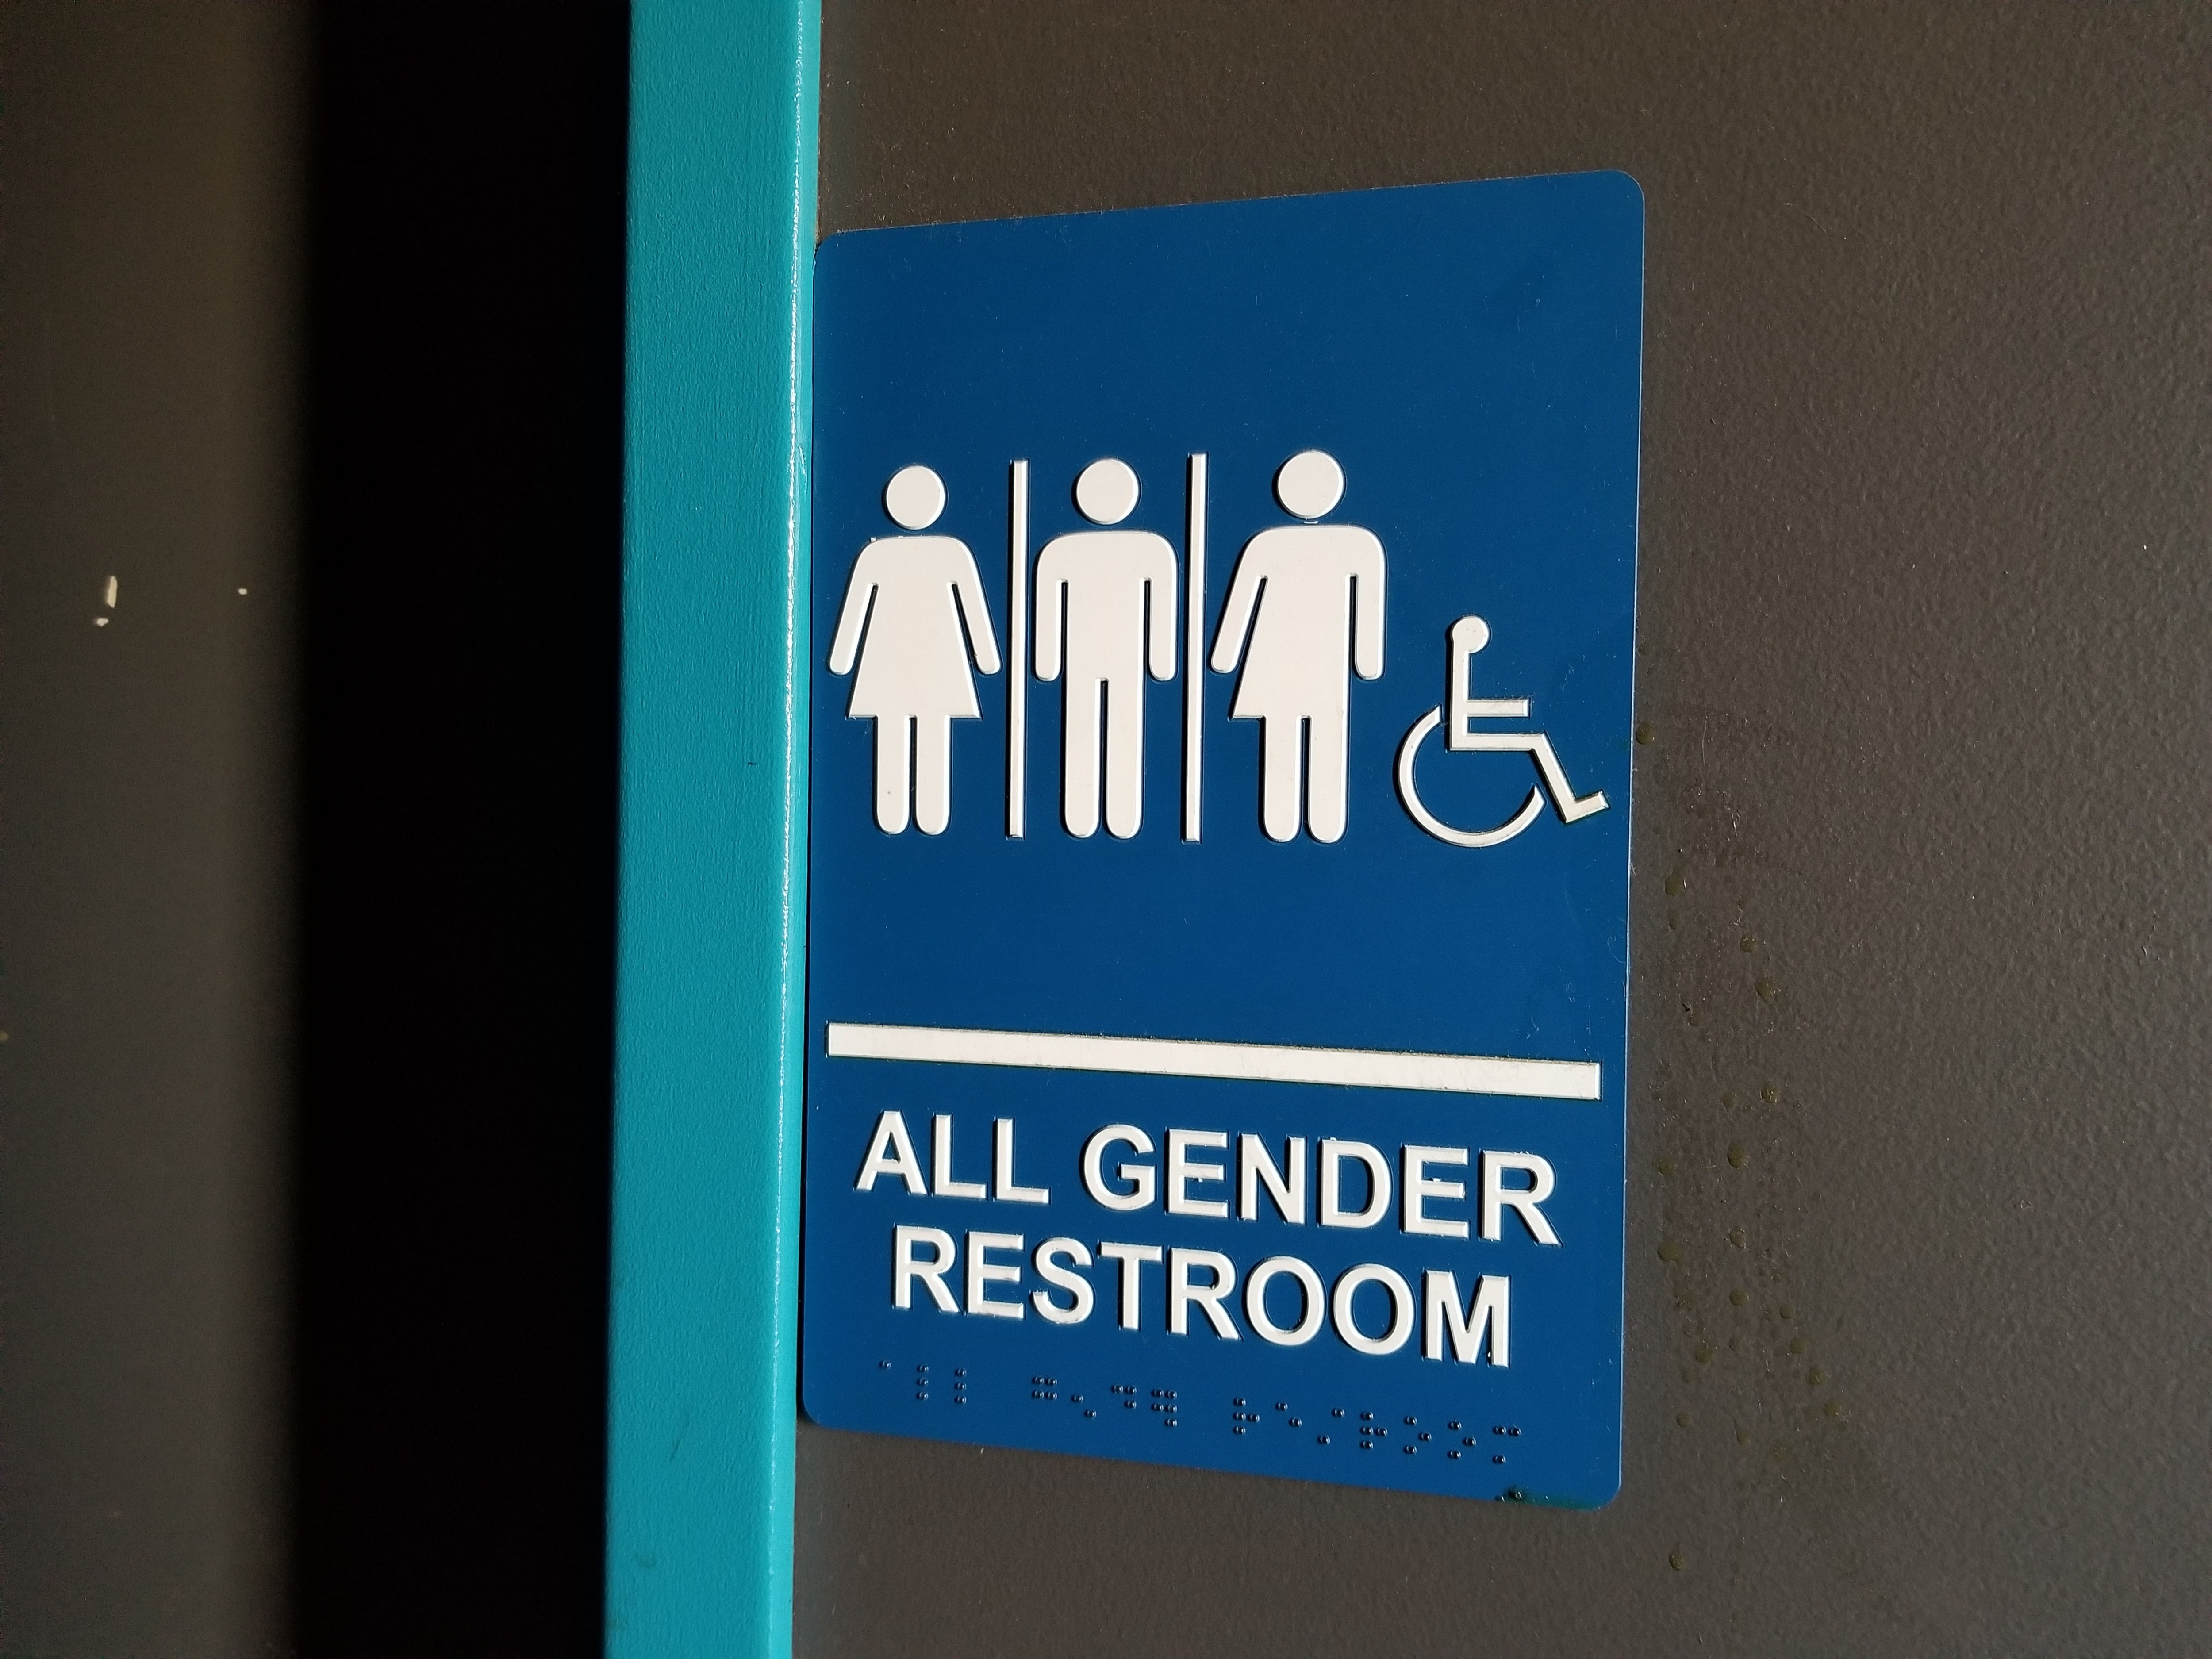 Virginia dad rips embattled school district's $11 million all-gender bathroom renovation plan: 'Insulting'